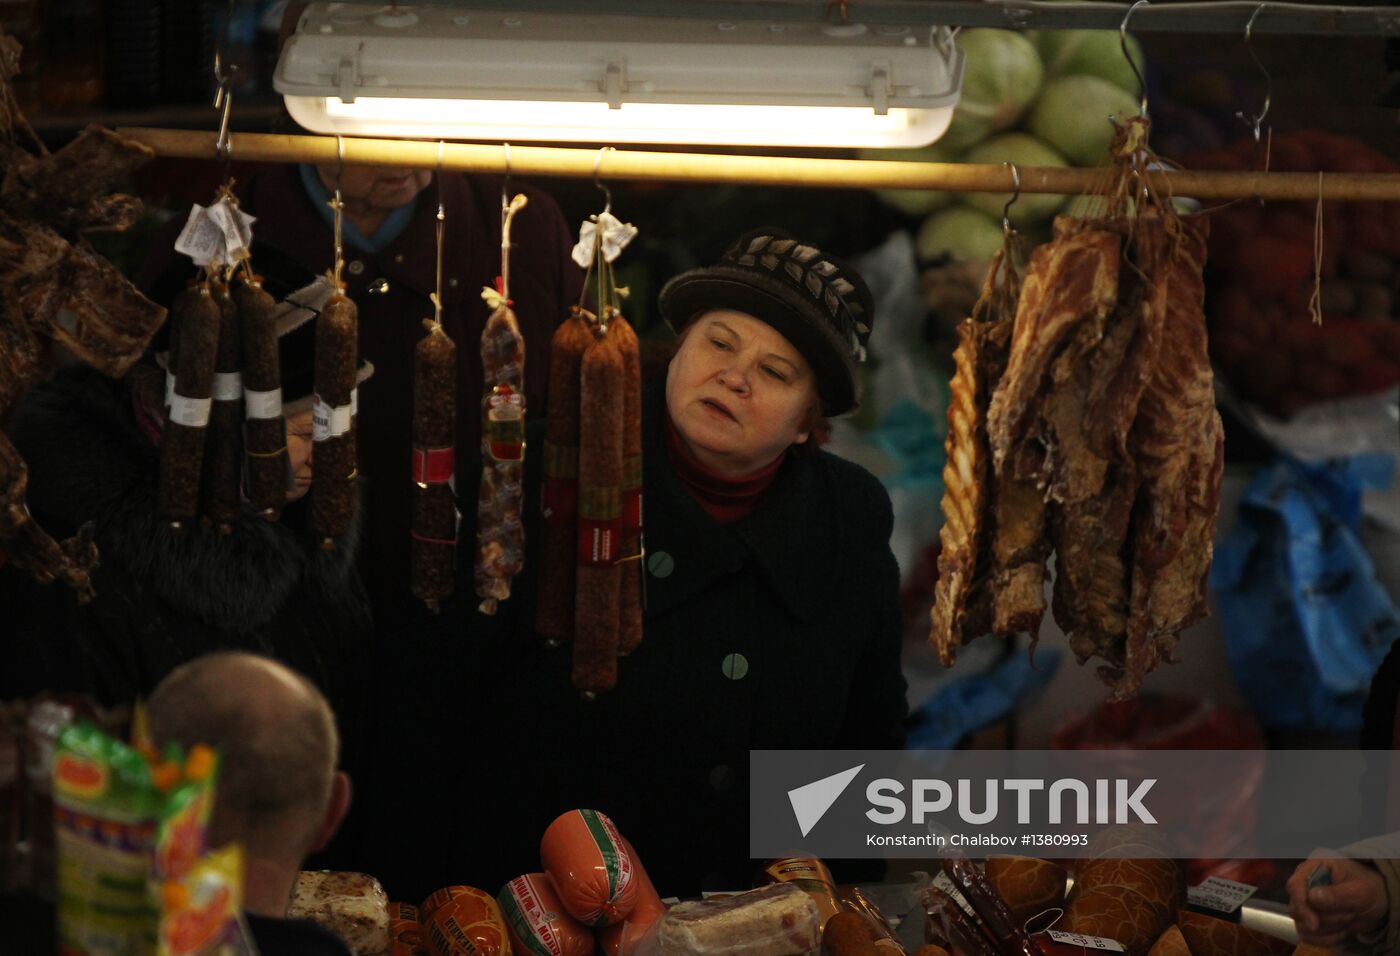 Agriculture market in Veliky Novgorod